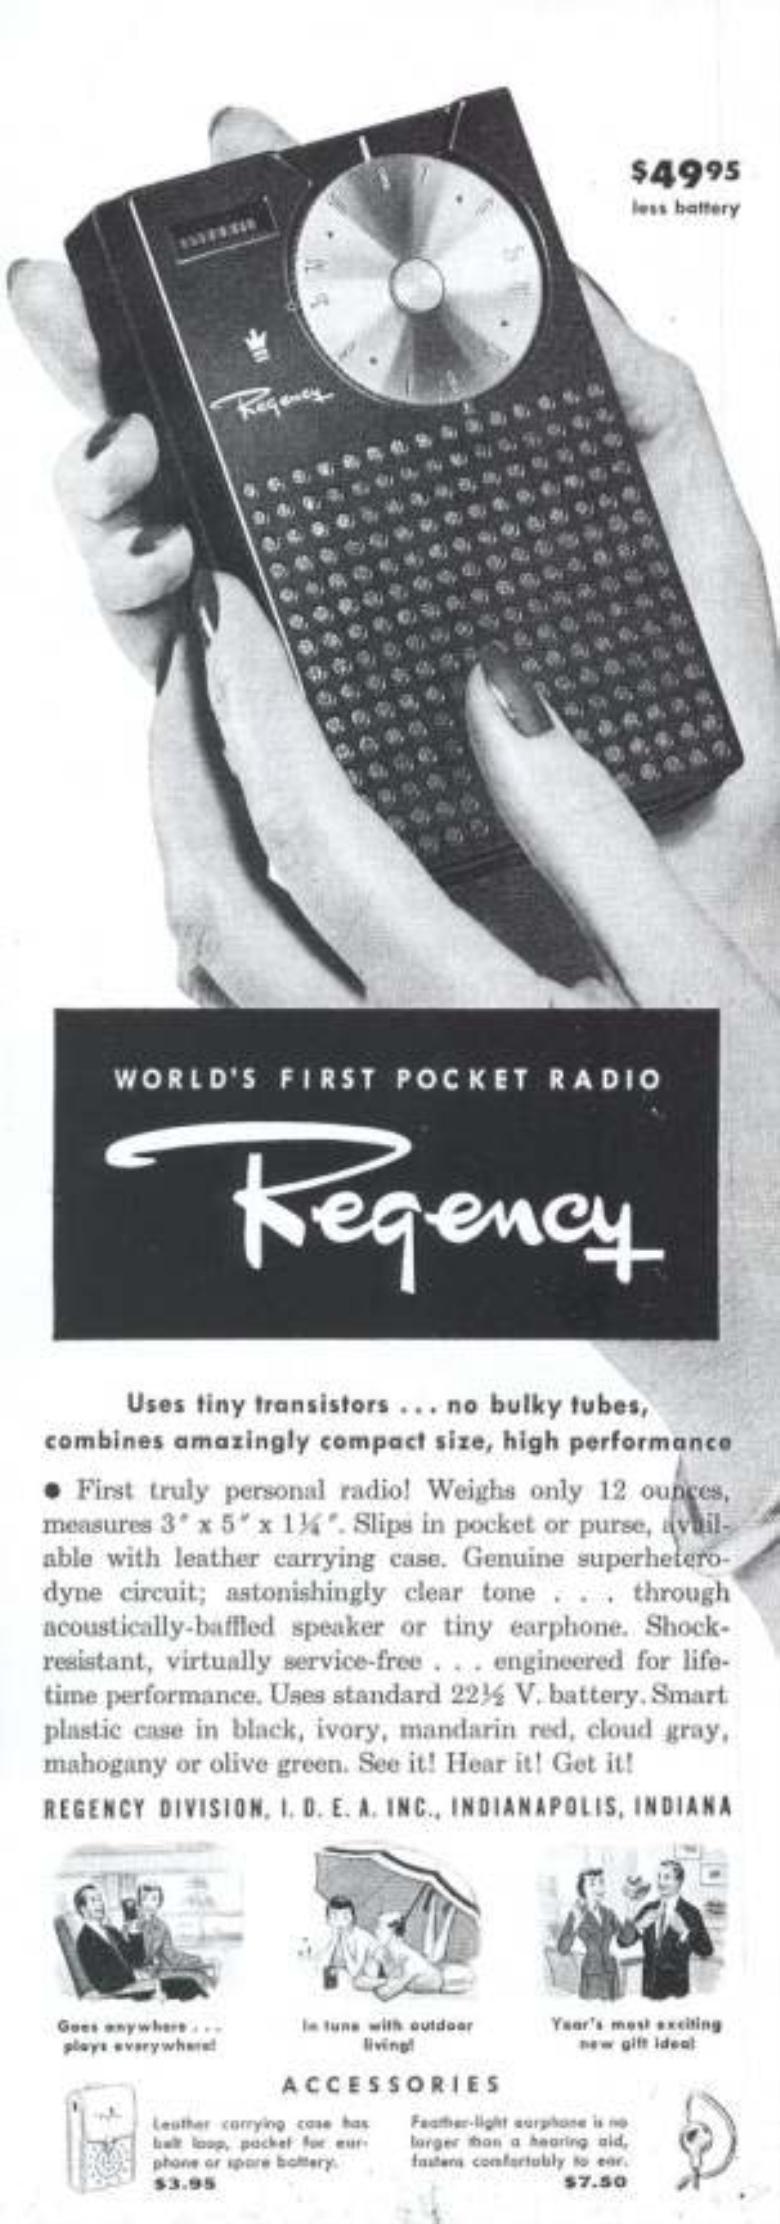 Radio portatile-iocero-2013-04-05-17-28-27-radio-regency-commercial